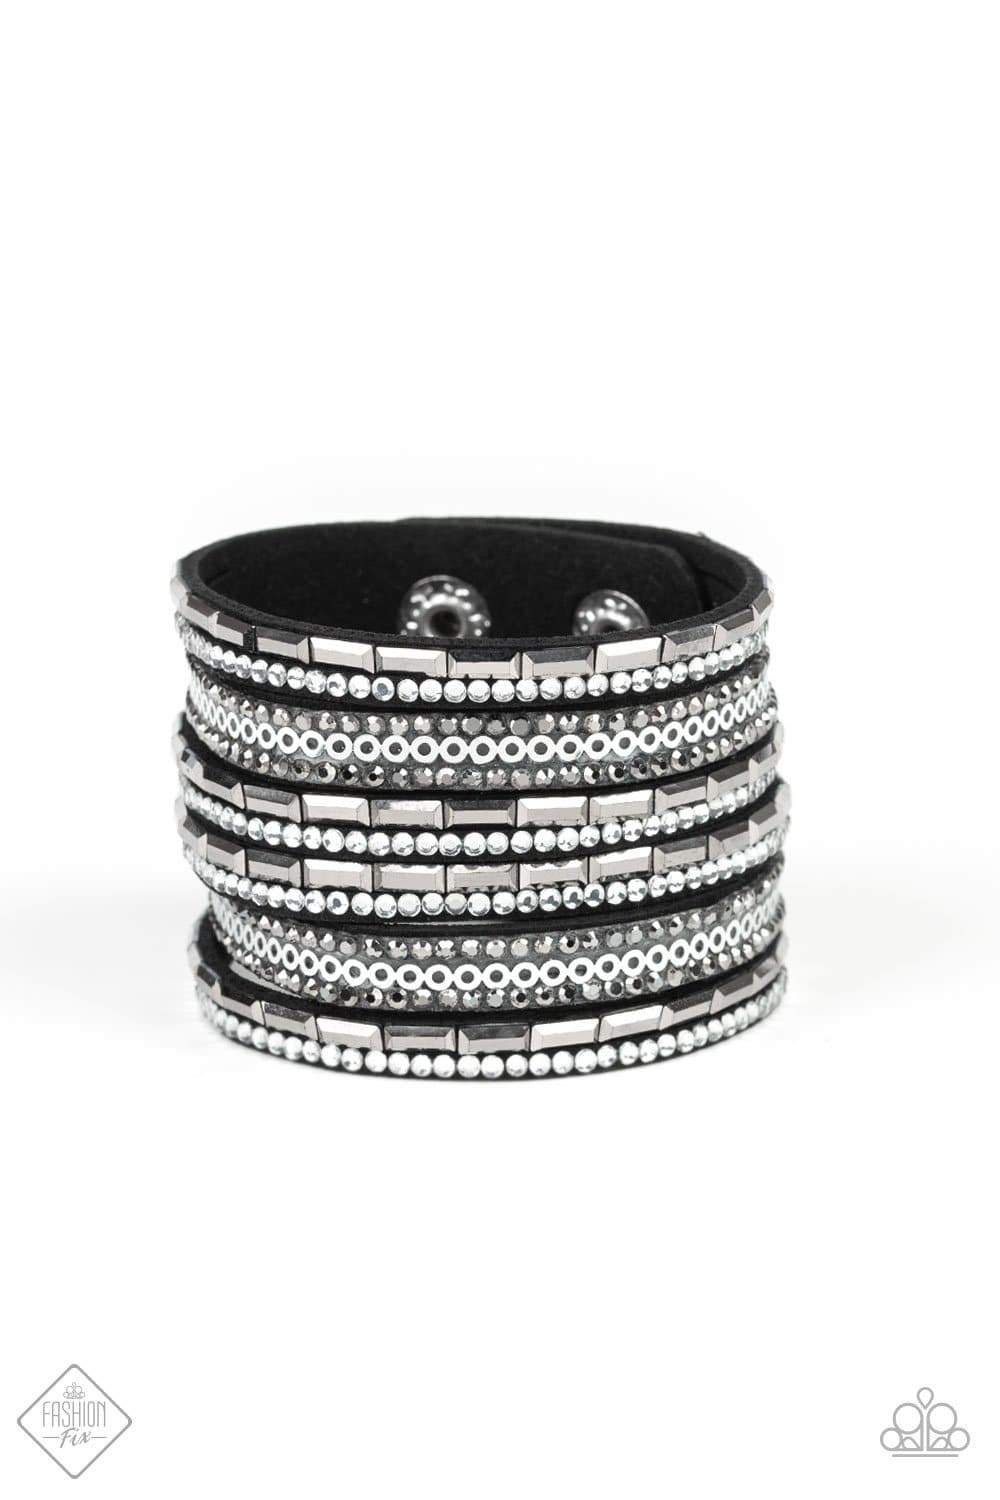 A Wait-and-SEQUIN Attitude - Black & White Rhinestone Wrap Bracelet - Paparazzi Accessories - GlaMarous Titi Jewels